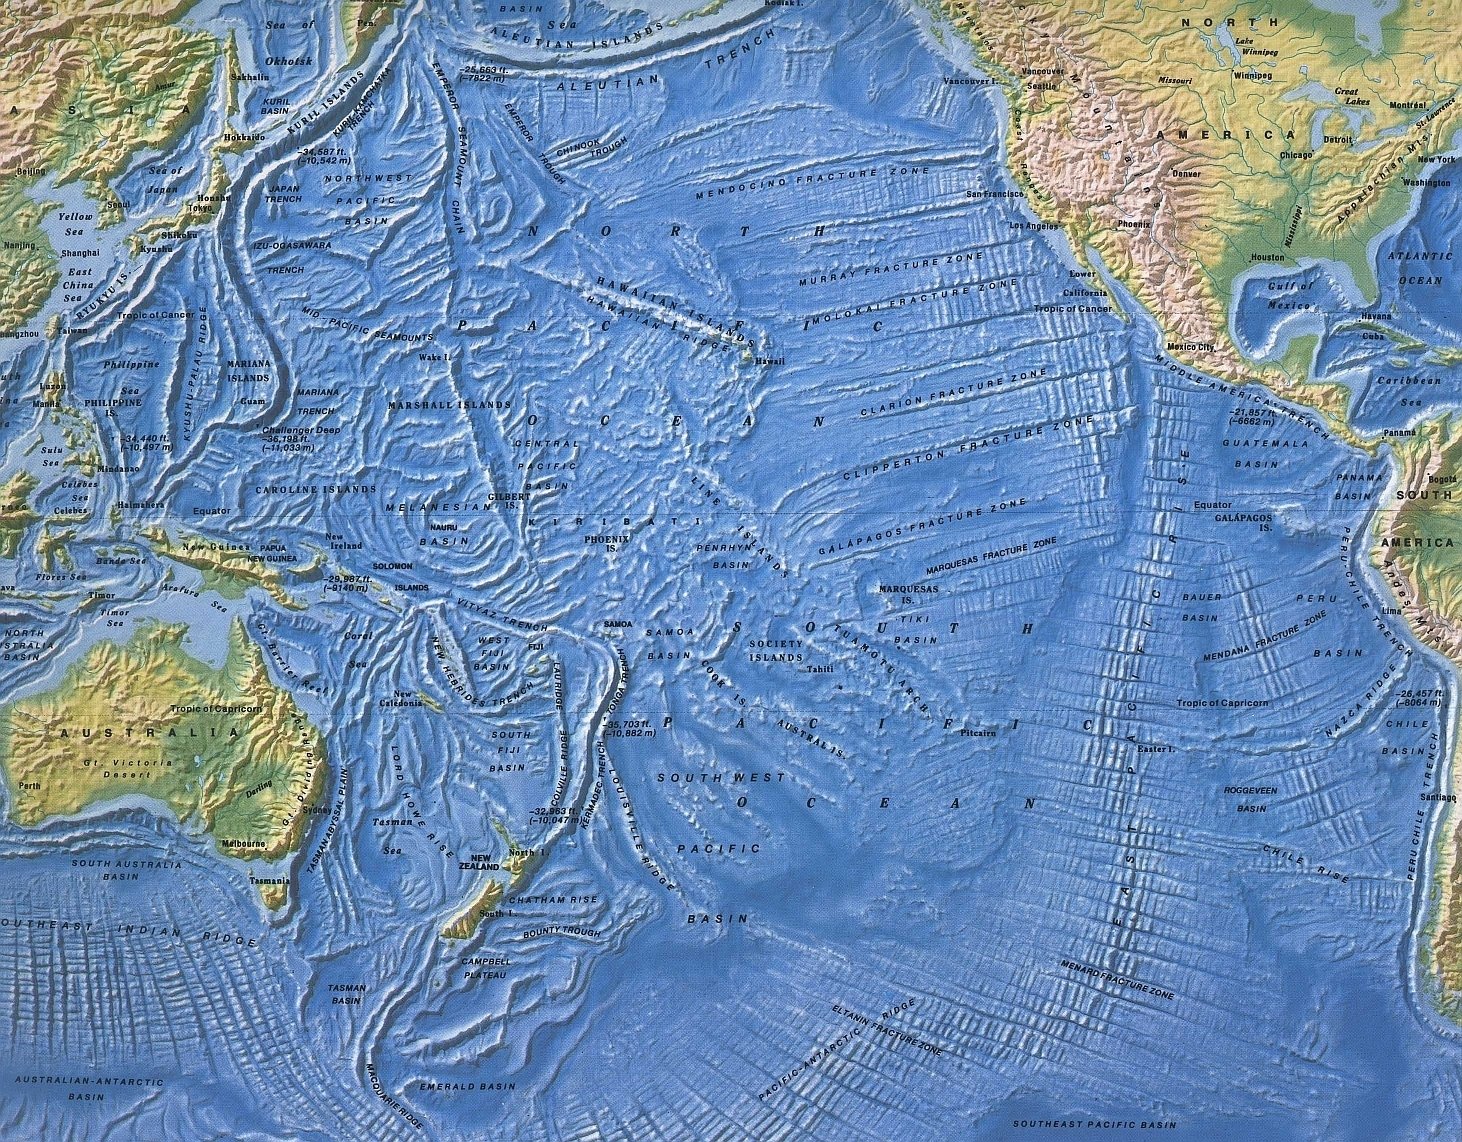 Форма тихого океана. Карта рельефа Тихого океана. Карта рельефа дна Тихого океана. Рельеф дна Тихого океана. Рельеф дна океана Тихого океана карта.